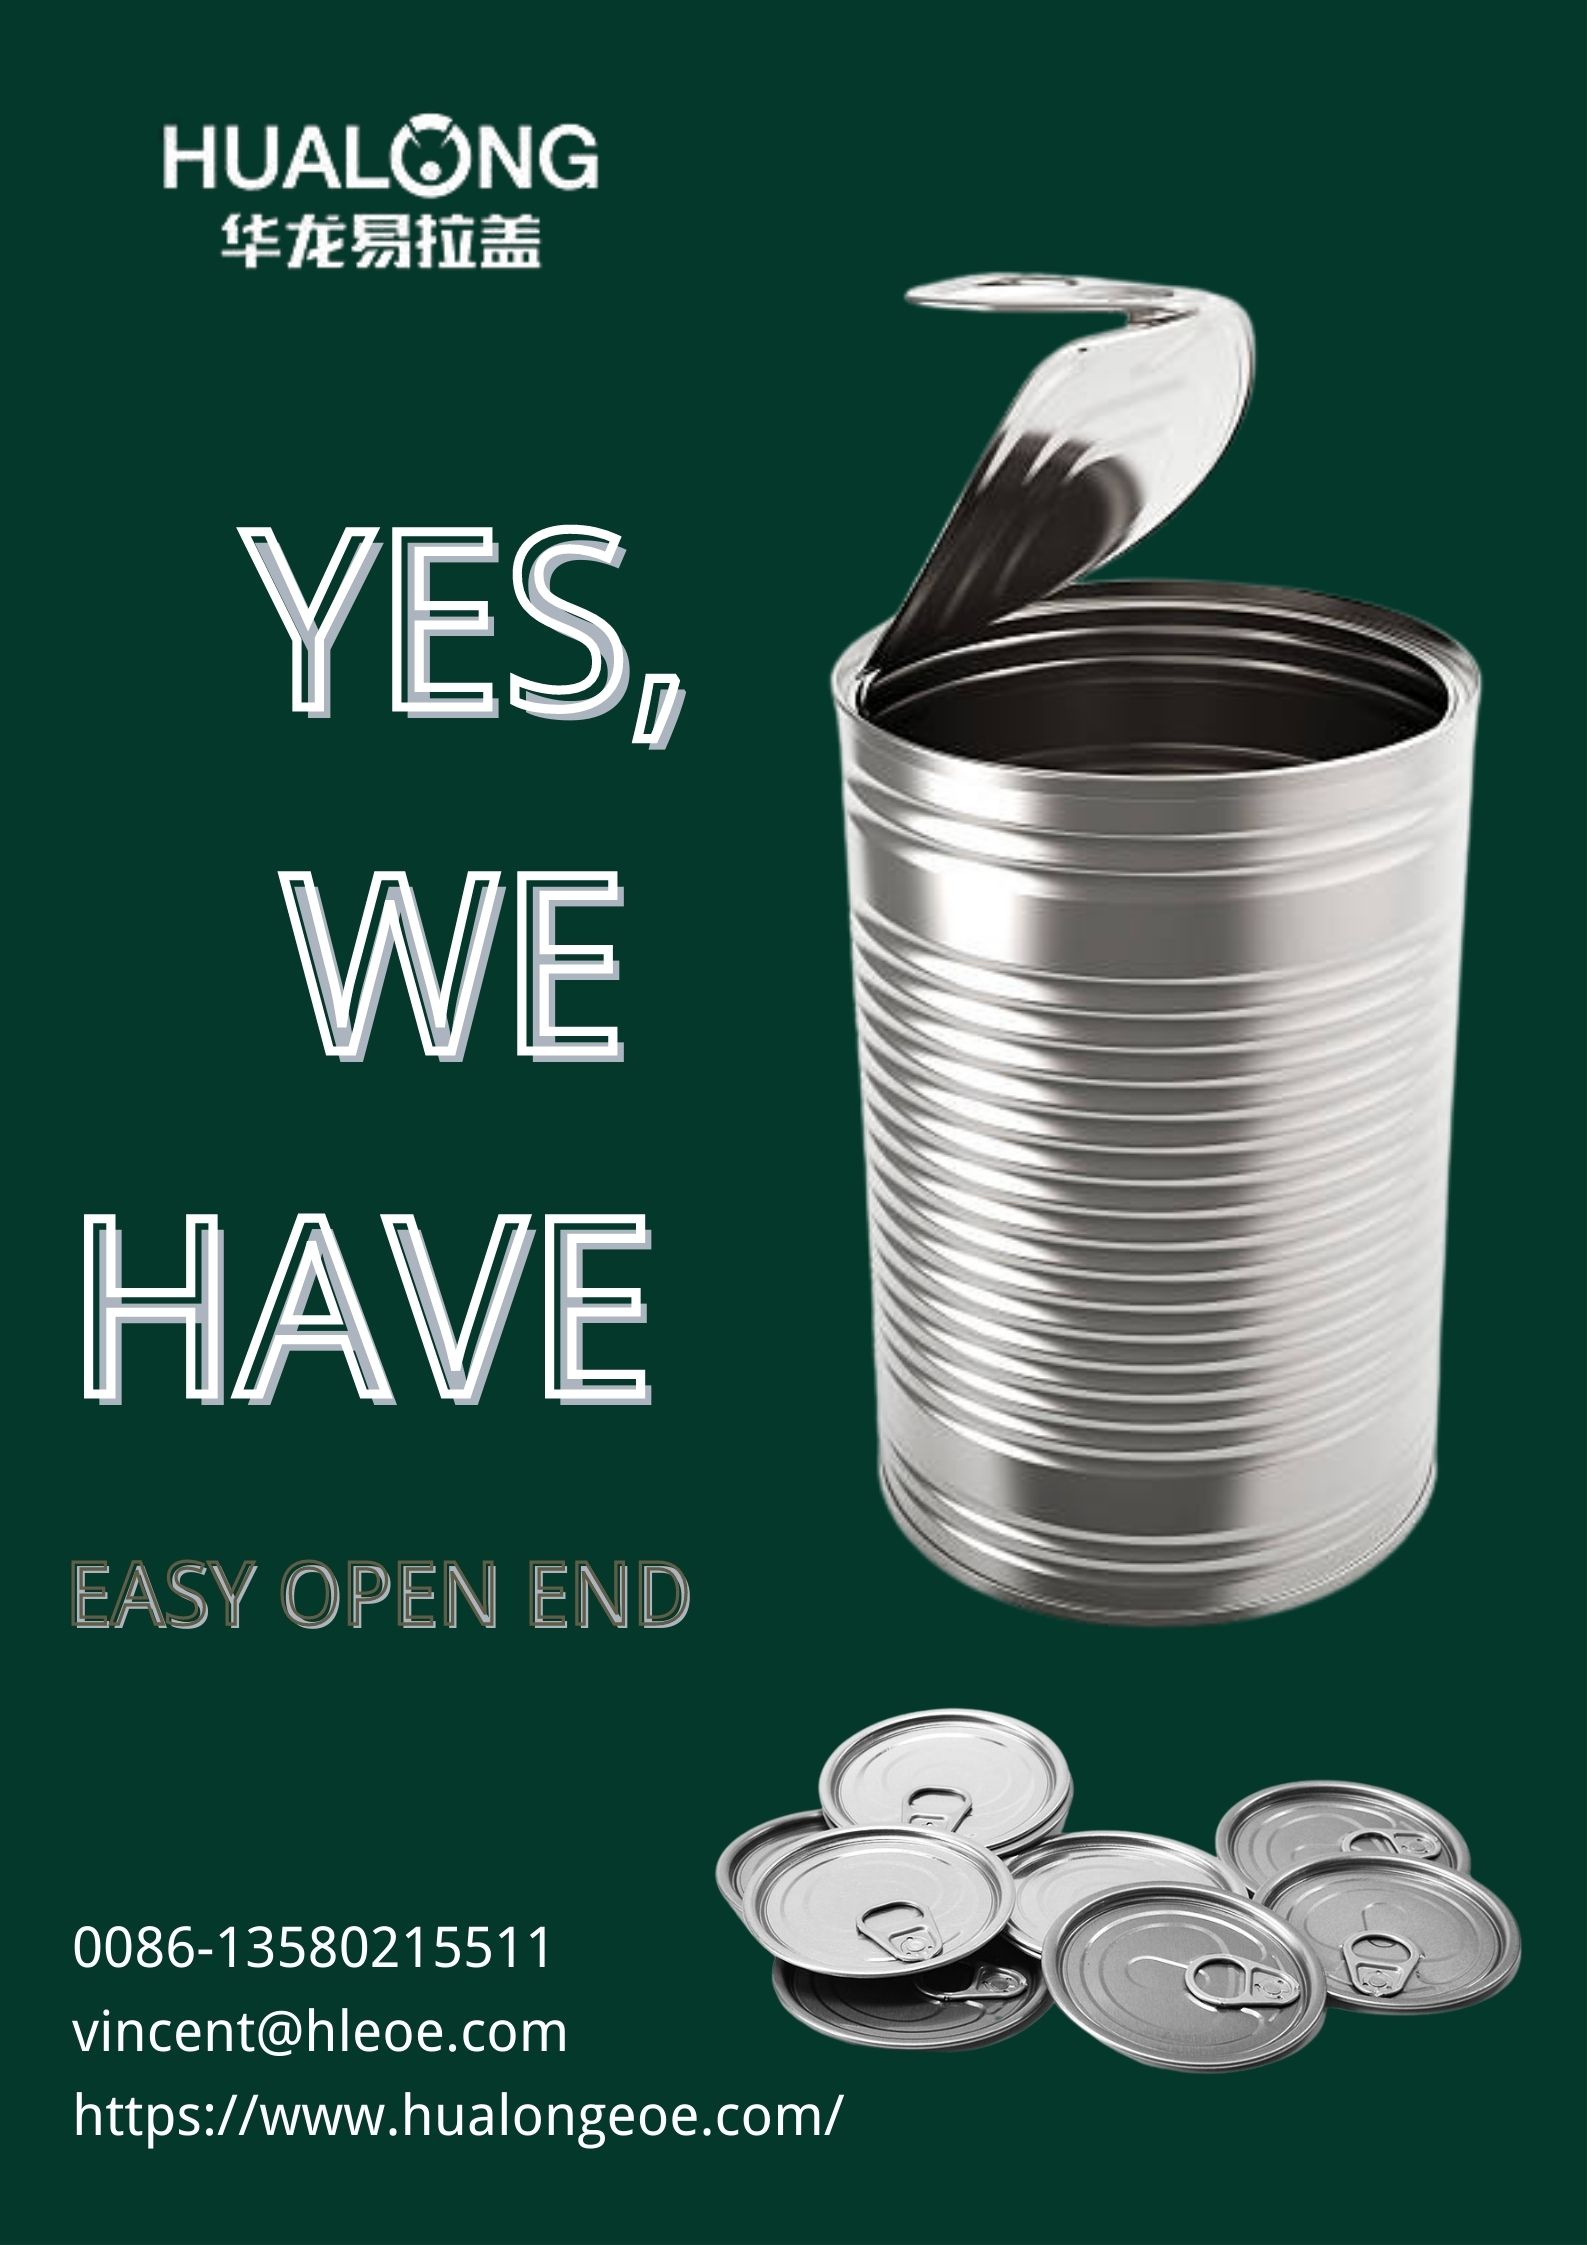 Hualong EOE: Kako pravilno reciklirati Easy Open End?